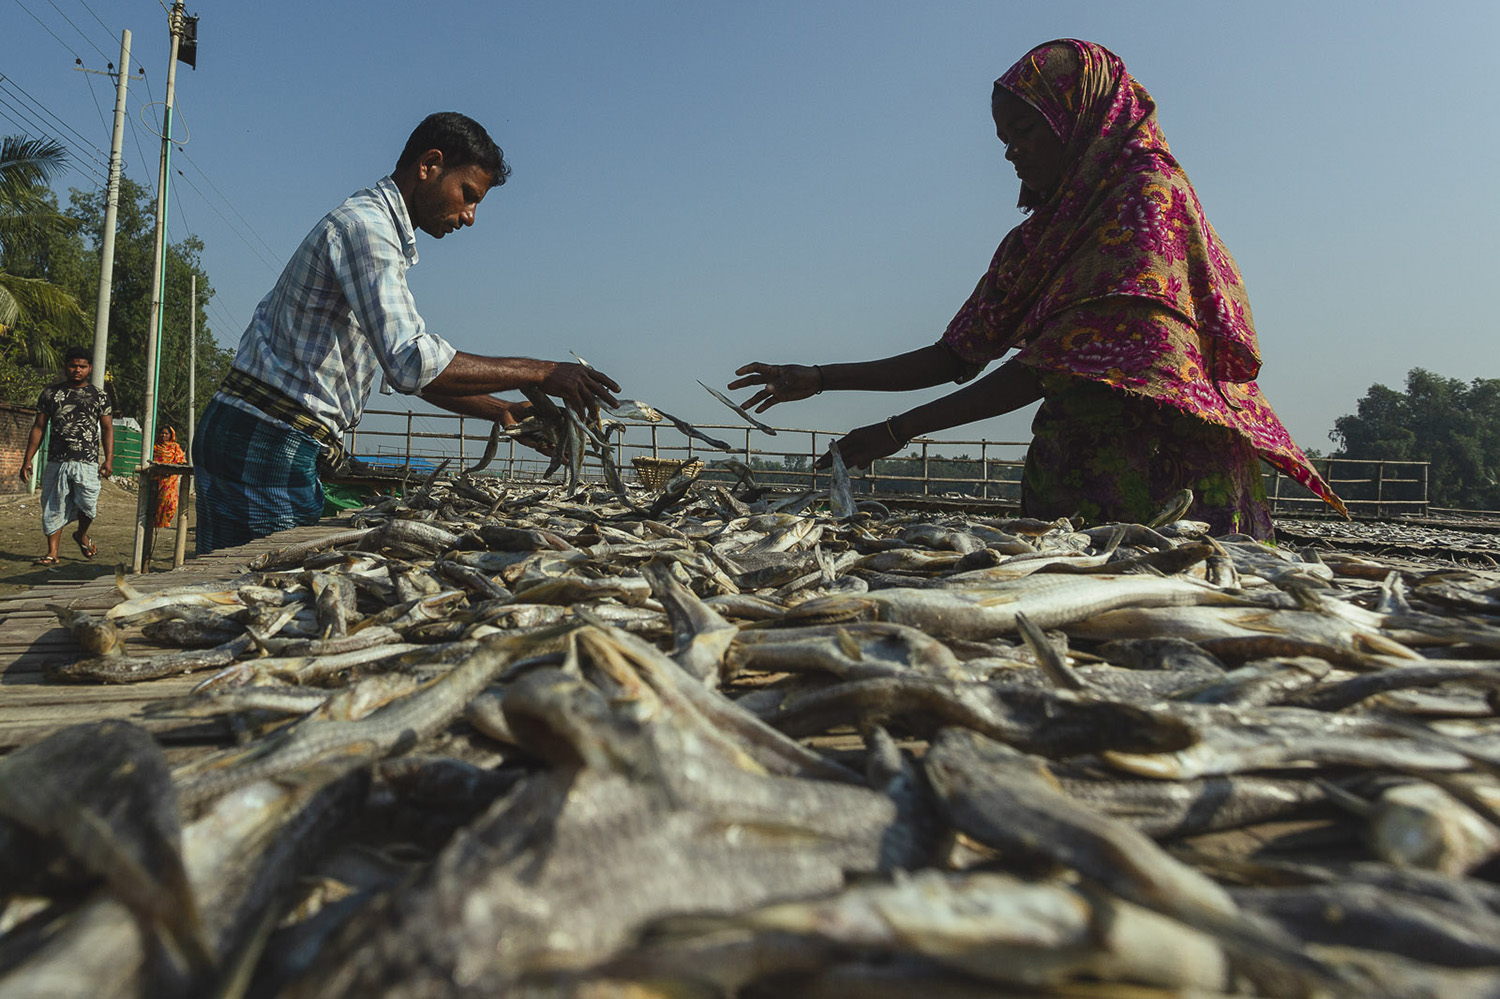 Workers tossing fish on racks at Dhaka - Bangladesh Dried Fish Village.